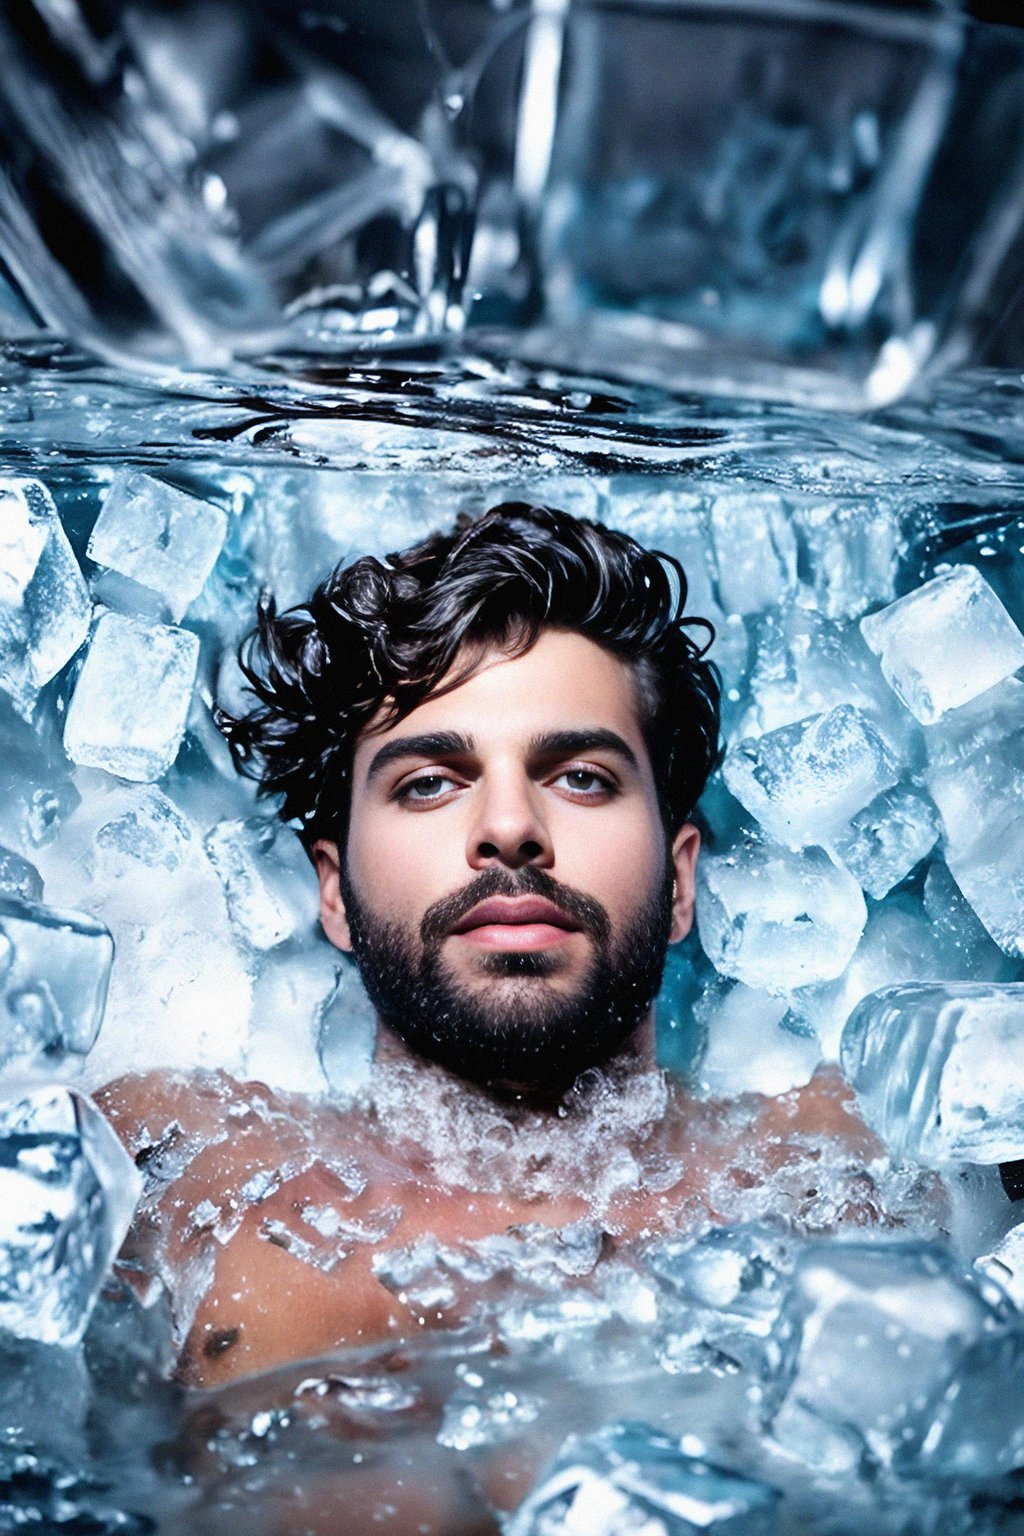 man lying in a bath of ice cubes